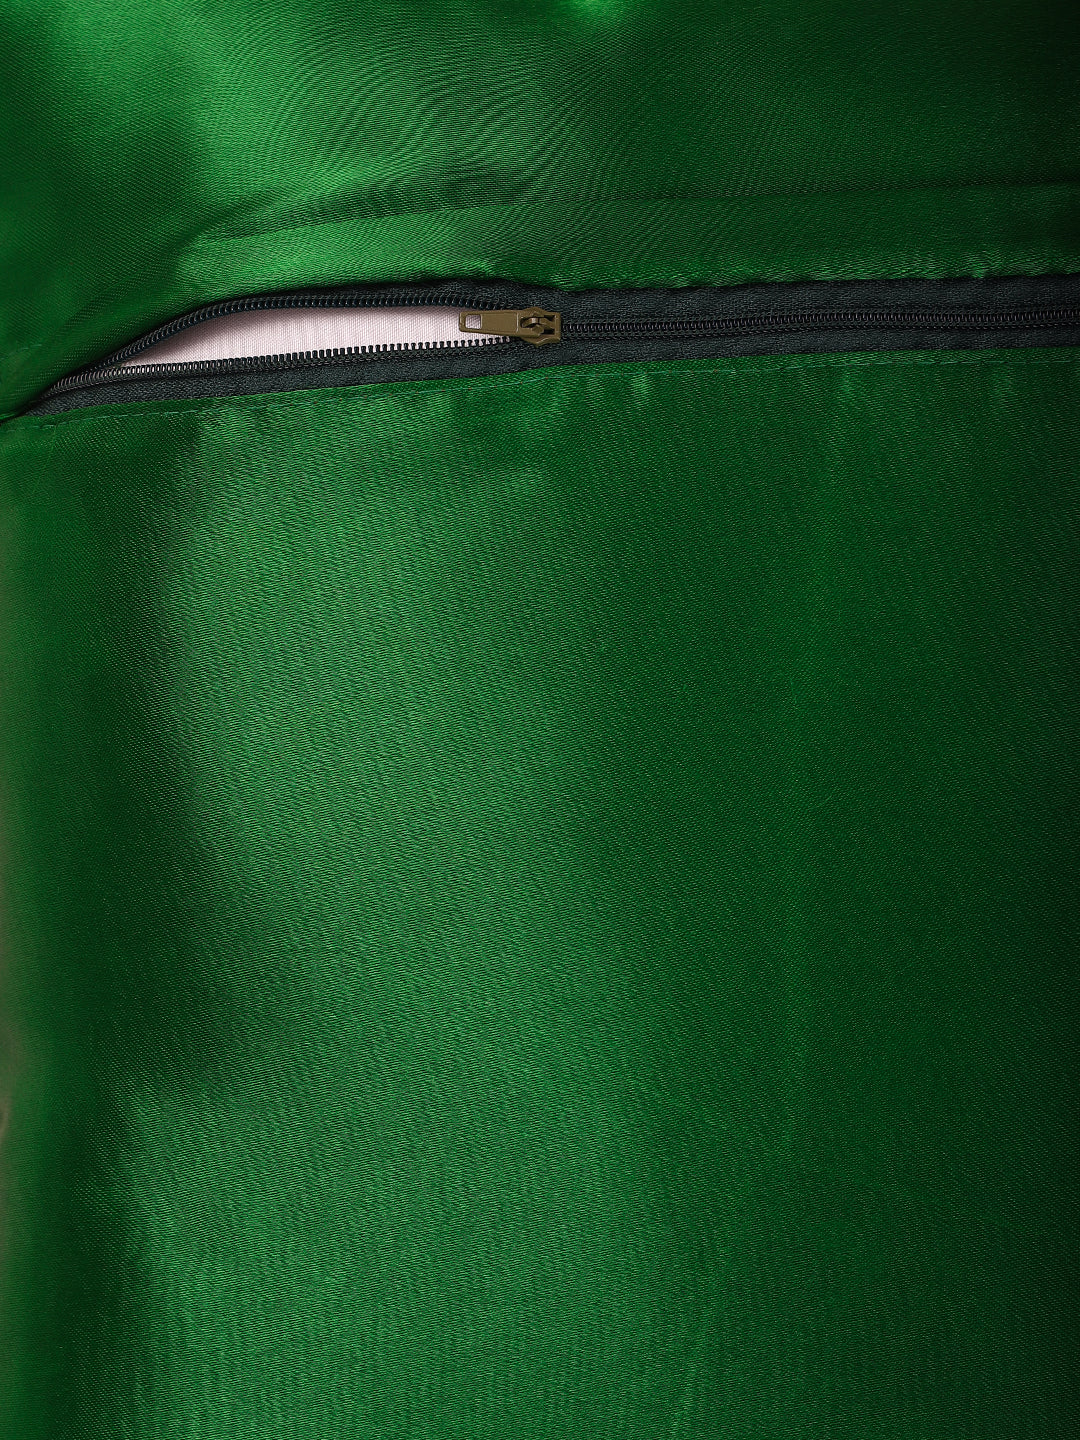 Silkfab Set 0f 5 Decorative Silk Cushion Covers (16x16) Boota Green - SILKFAB